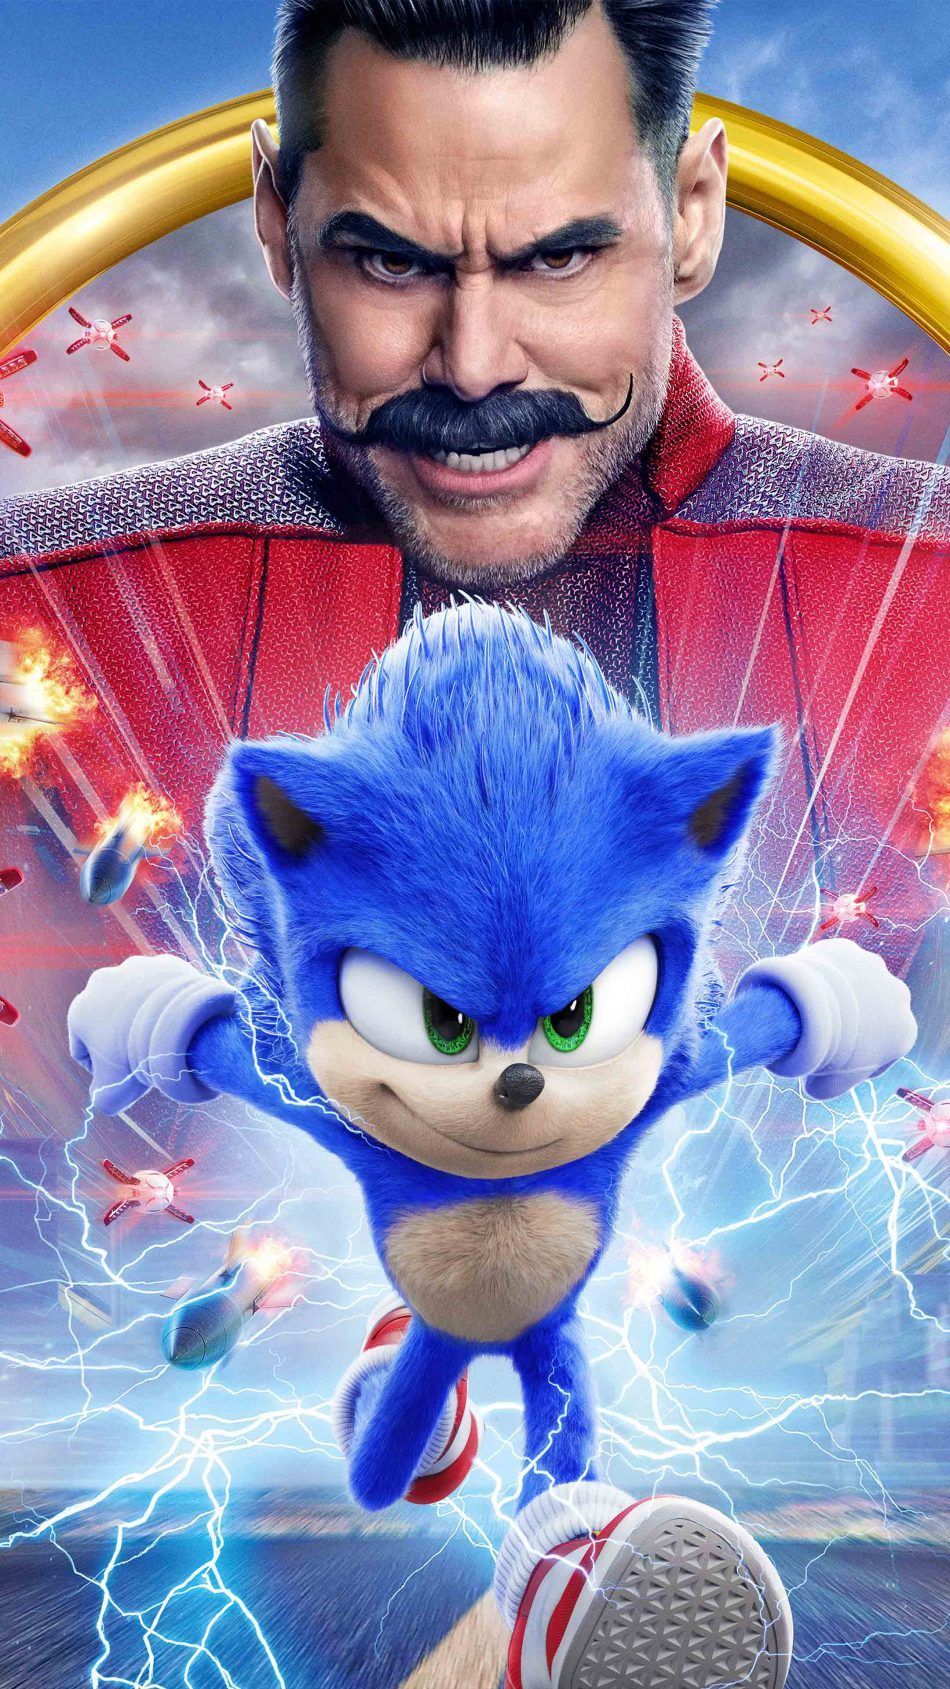 Sonic The Hedgehog (2020) Wallpaper by HigorMatosDA2005 on DeviantArt